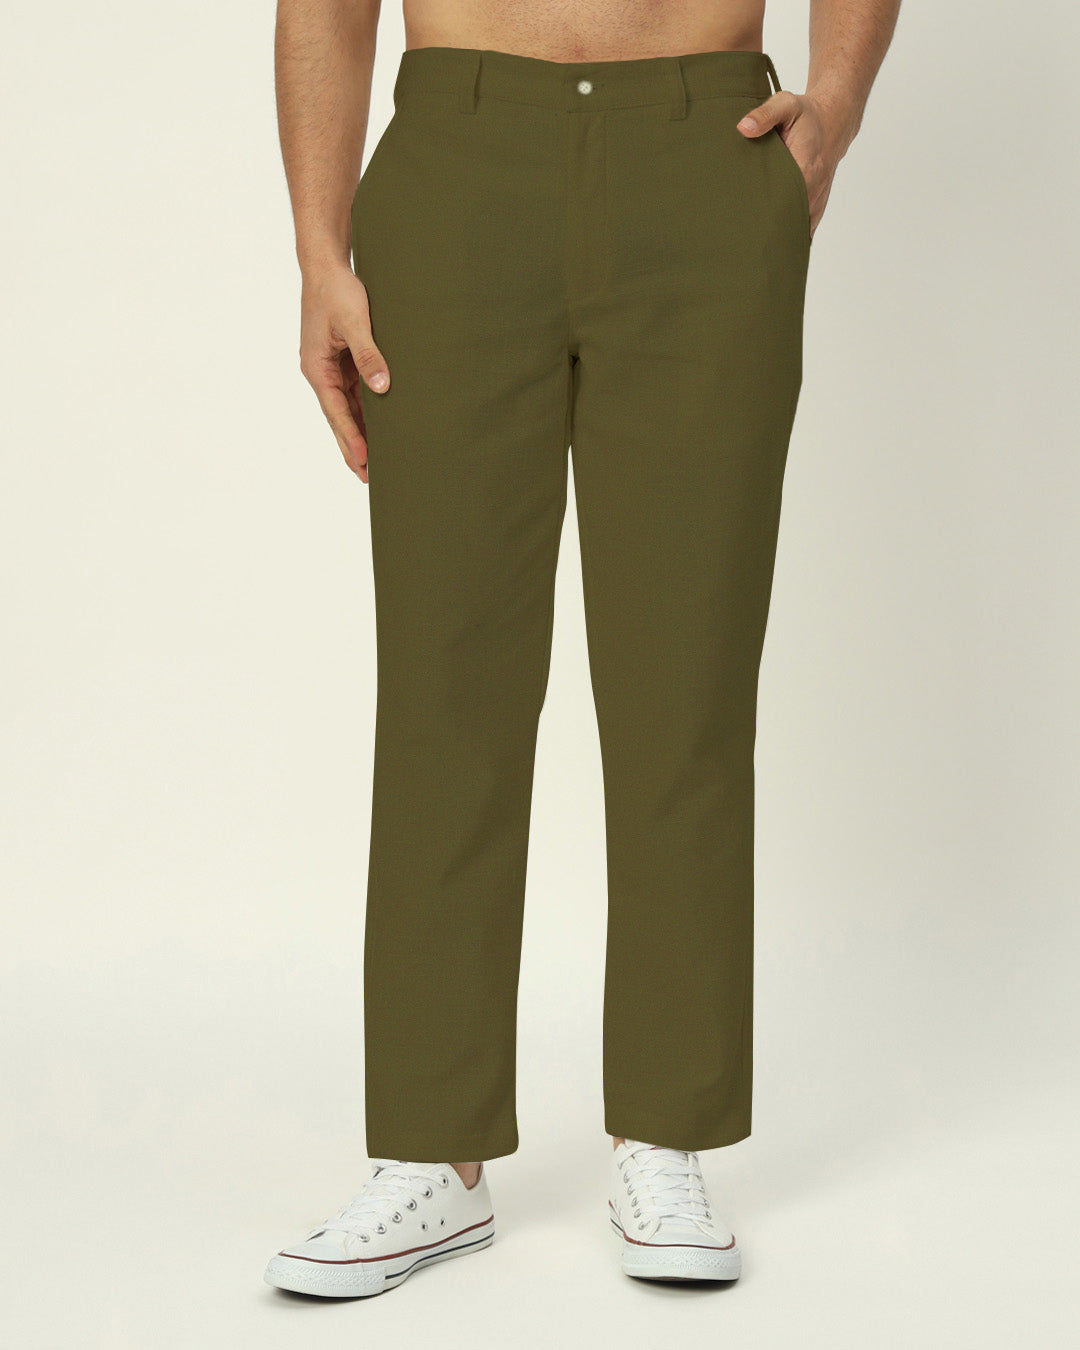 Modern Classic Olive Green Men's Pants